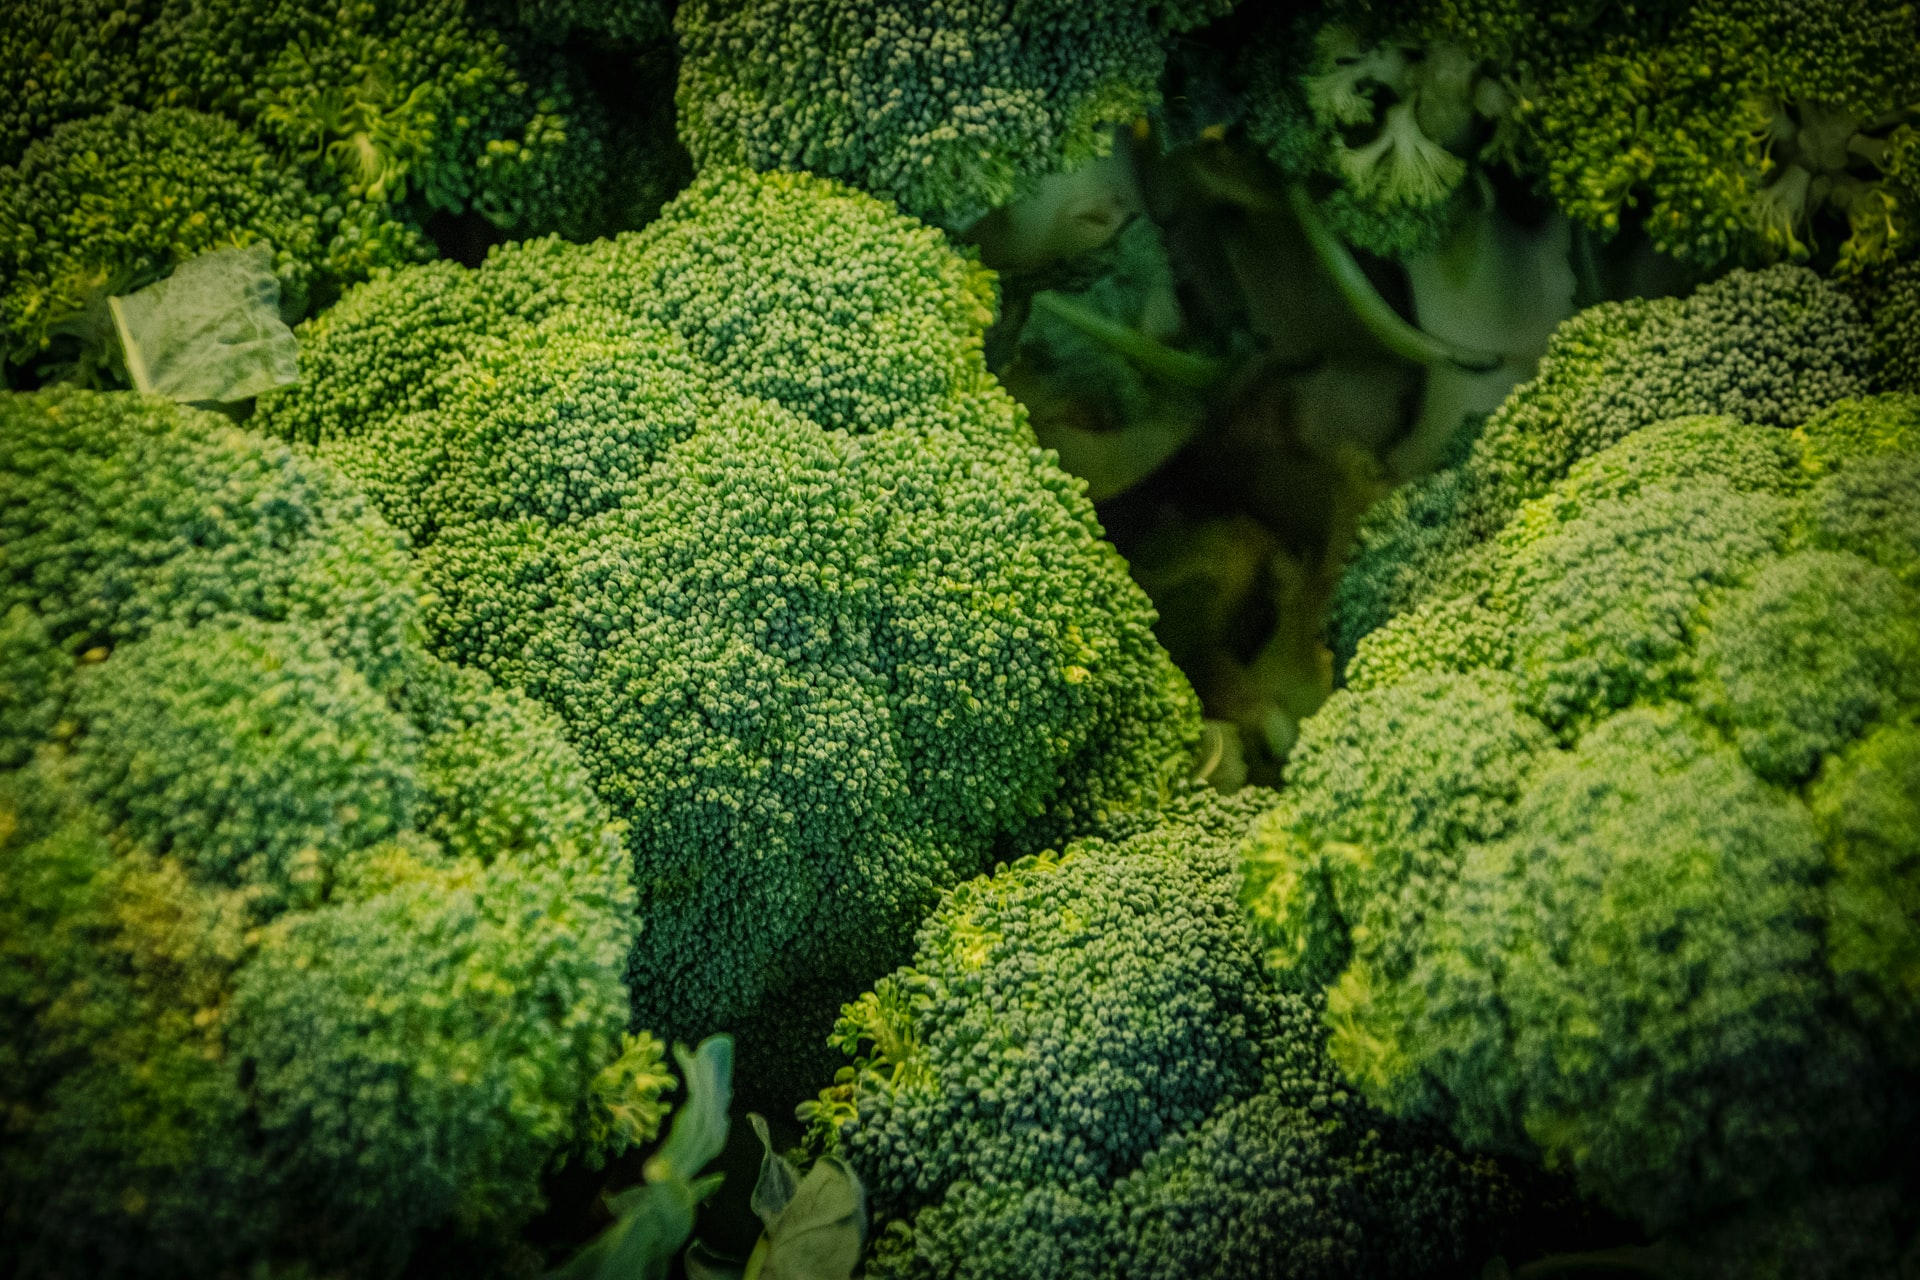 US broccoli production